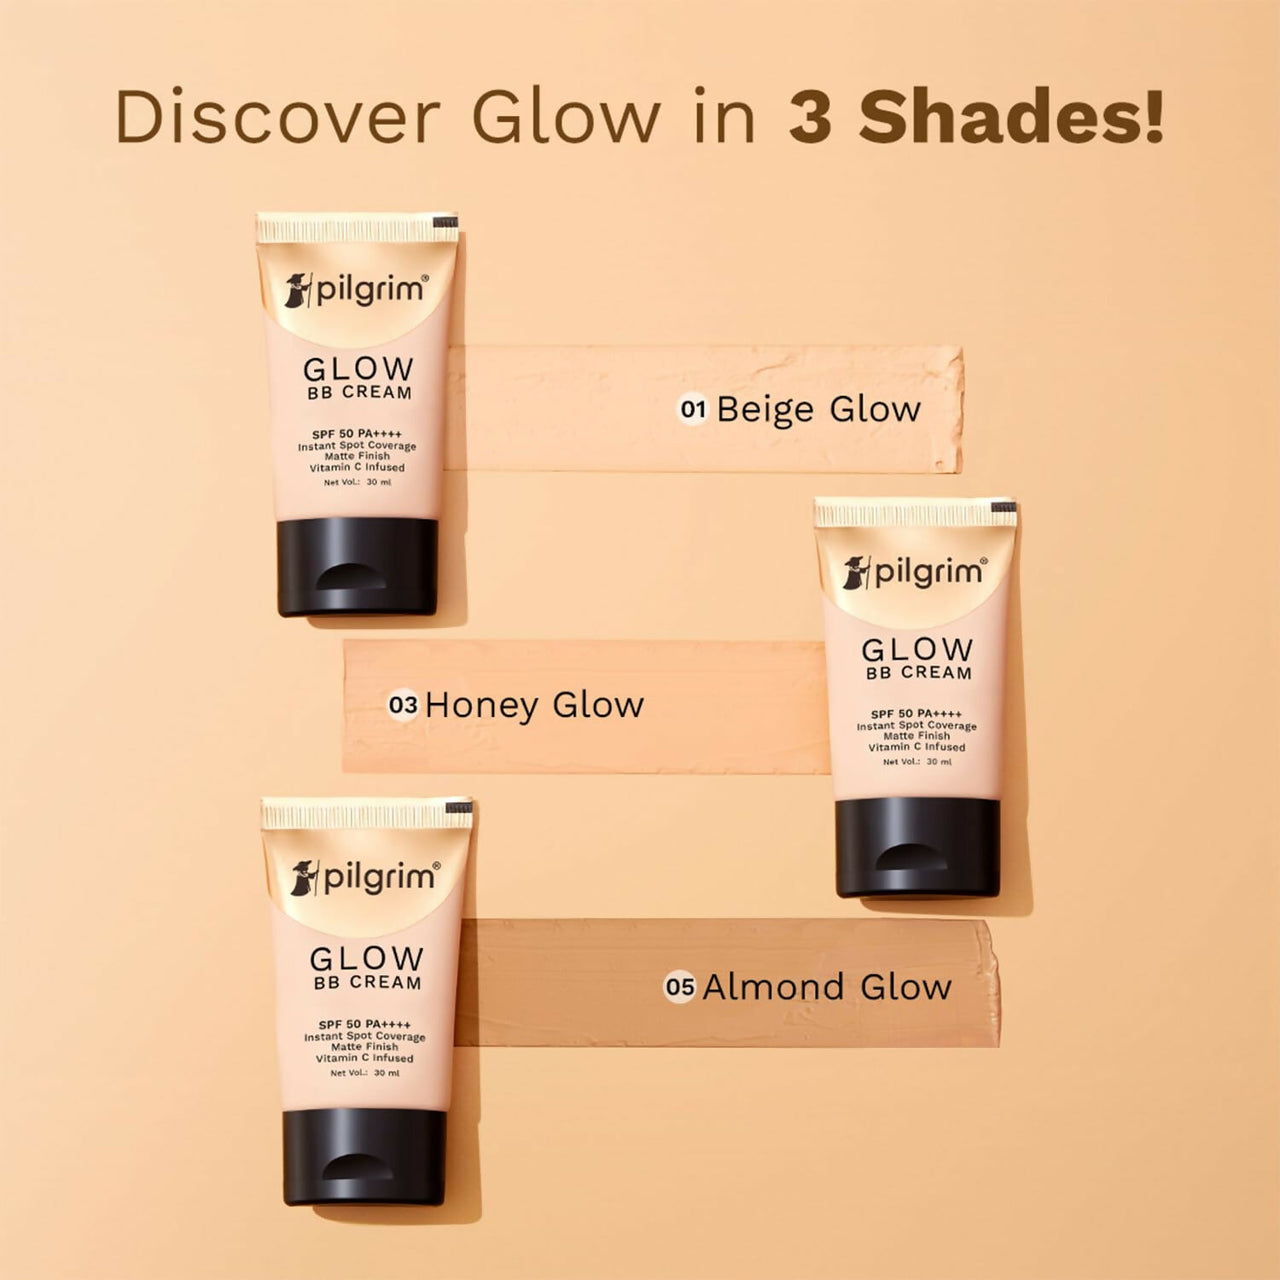 Pilgrim Glow BB Cream SPF 50 PA++++ Instant Spot Coverage Matte Finish Vitamin C Infused - Beige Glow - Distacart